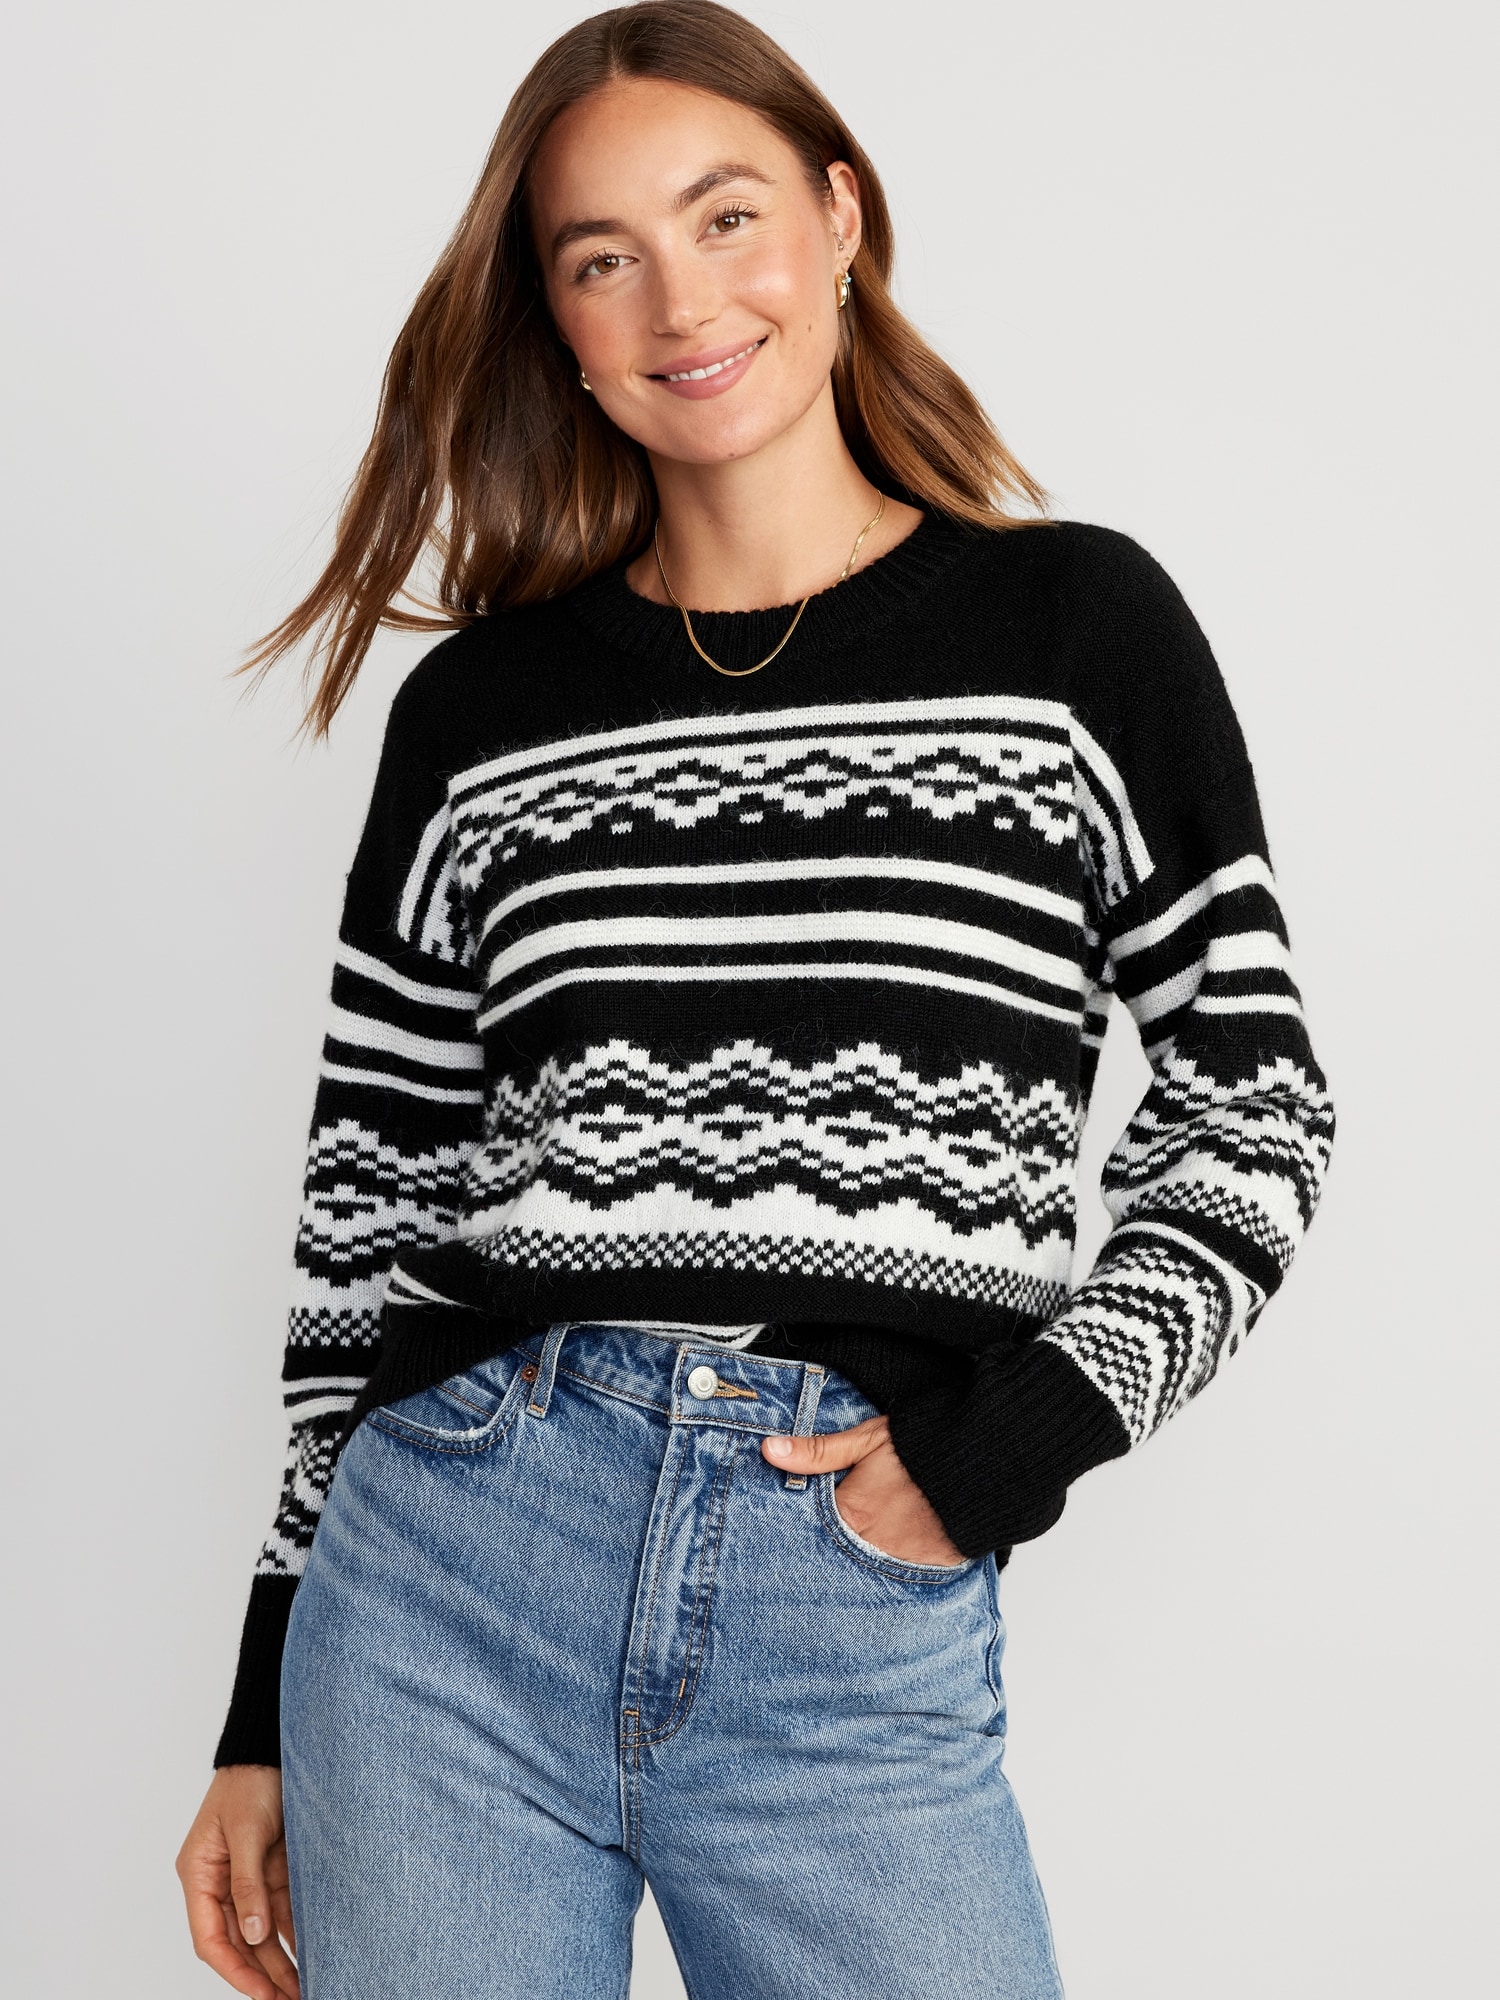 SimplySassy  Girls sweaters, Vintage bra, Sweaters